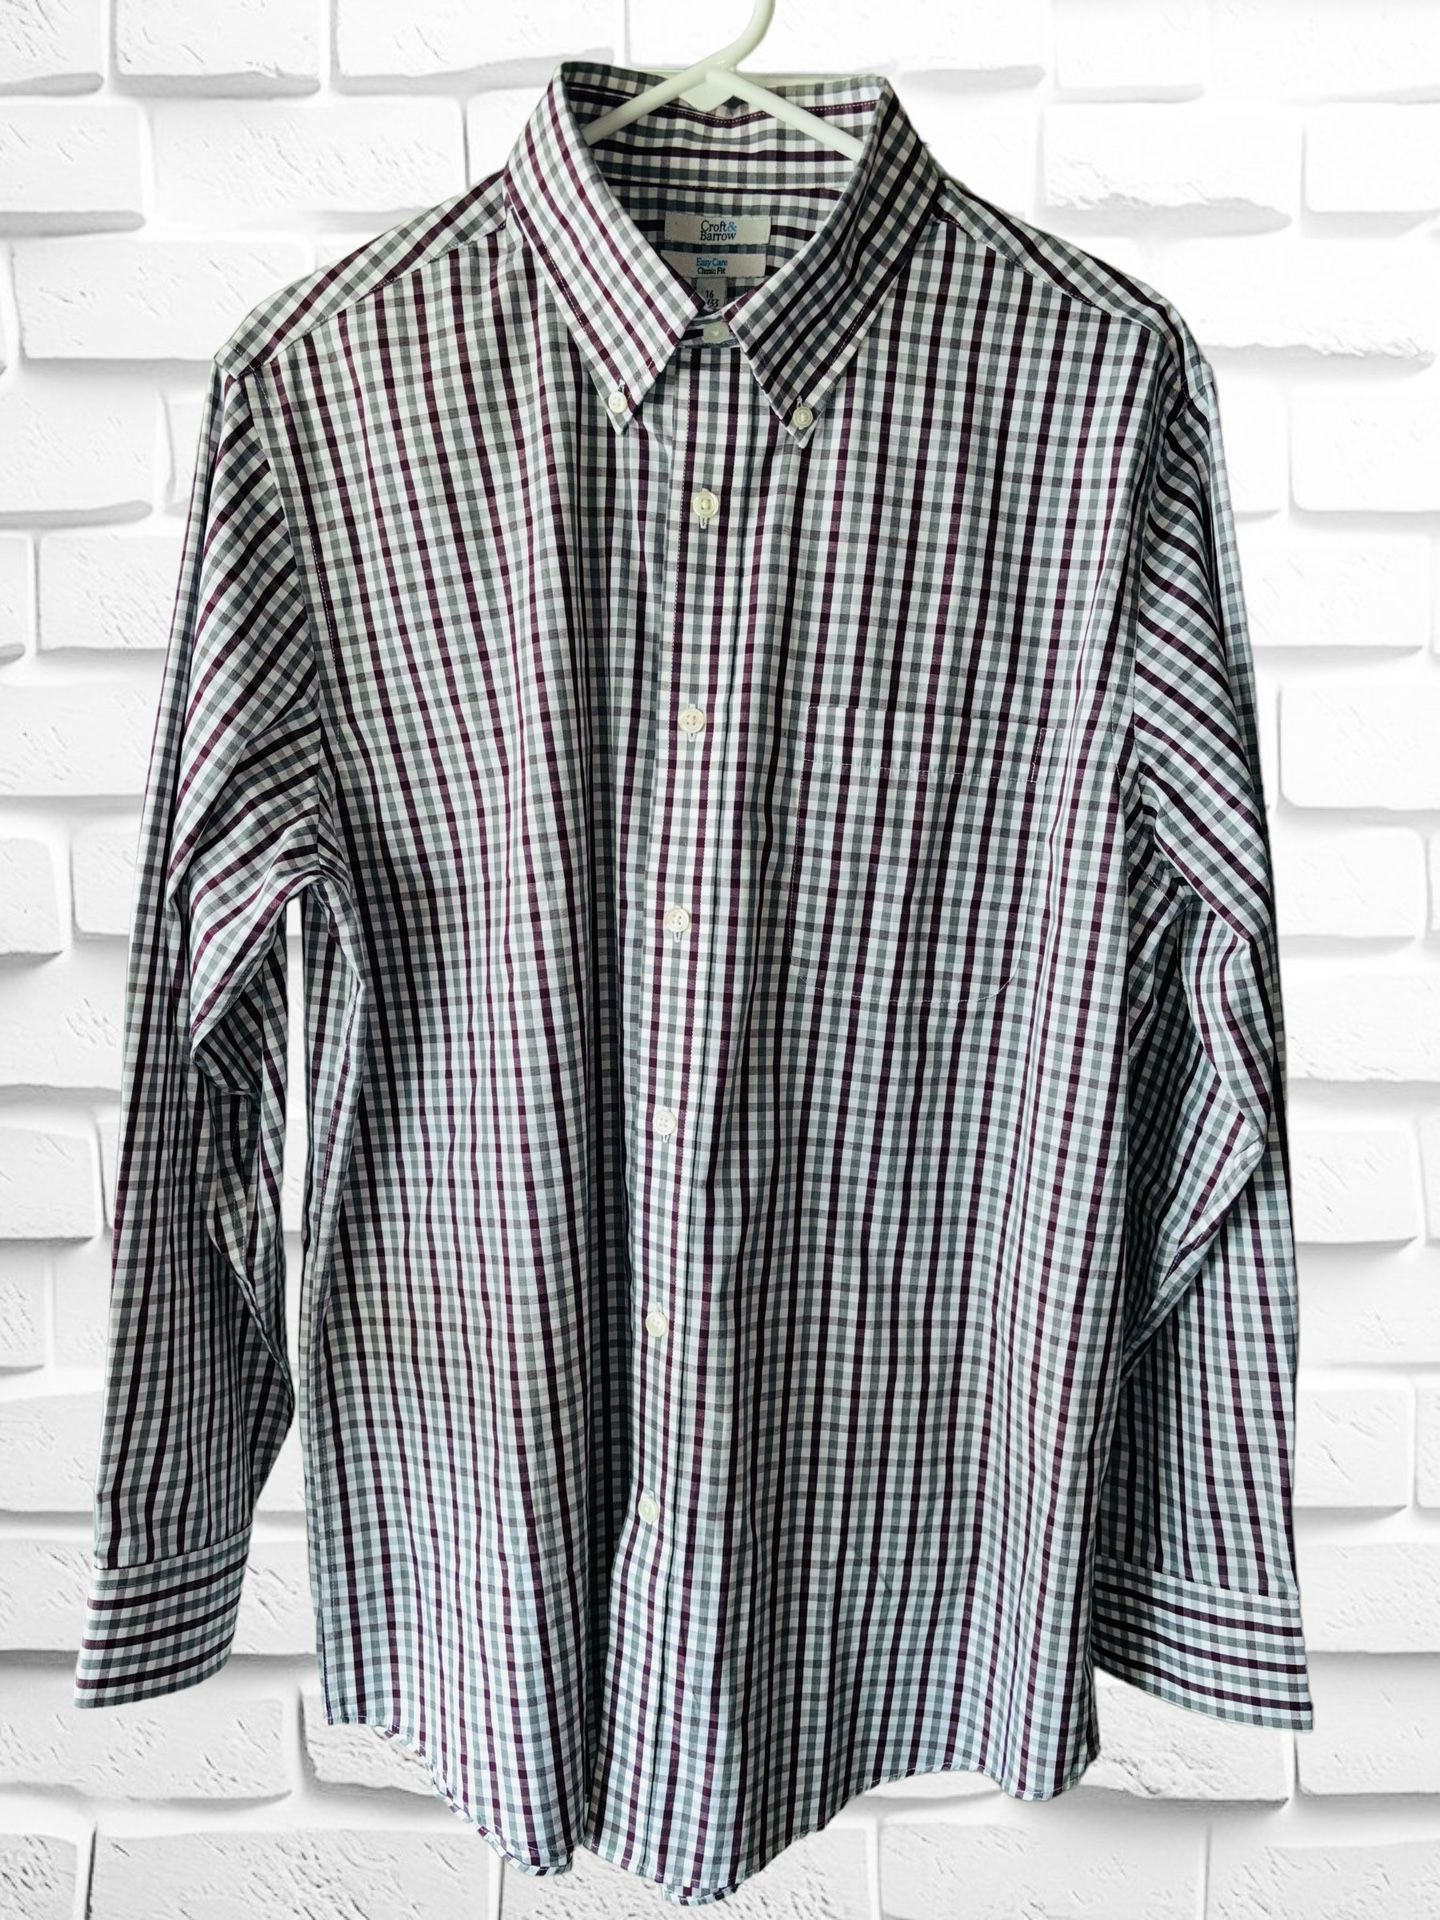 Croft & Barrow Men’s 16 32/33 Long Sleeve Plaid Button Down Dress Shirt • EUC